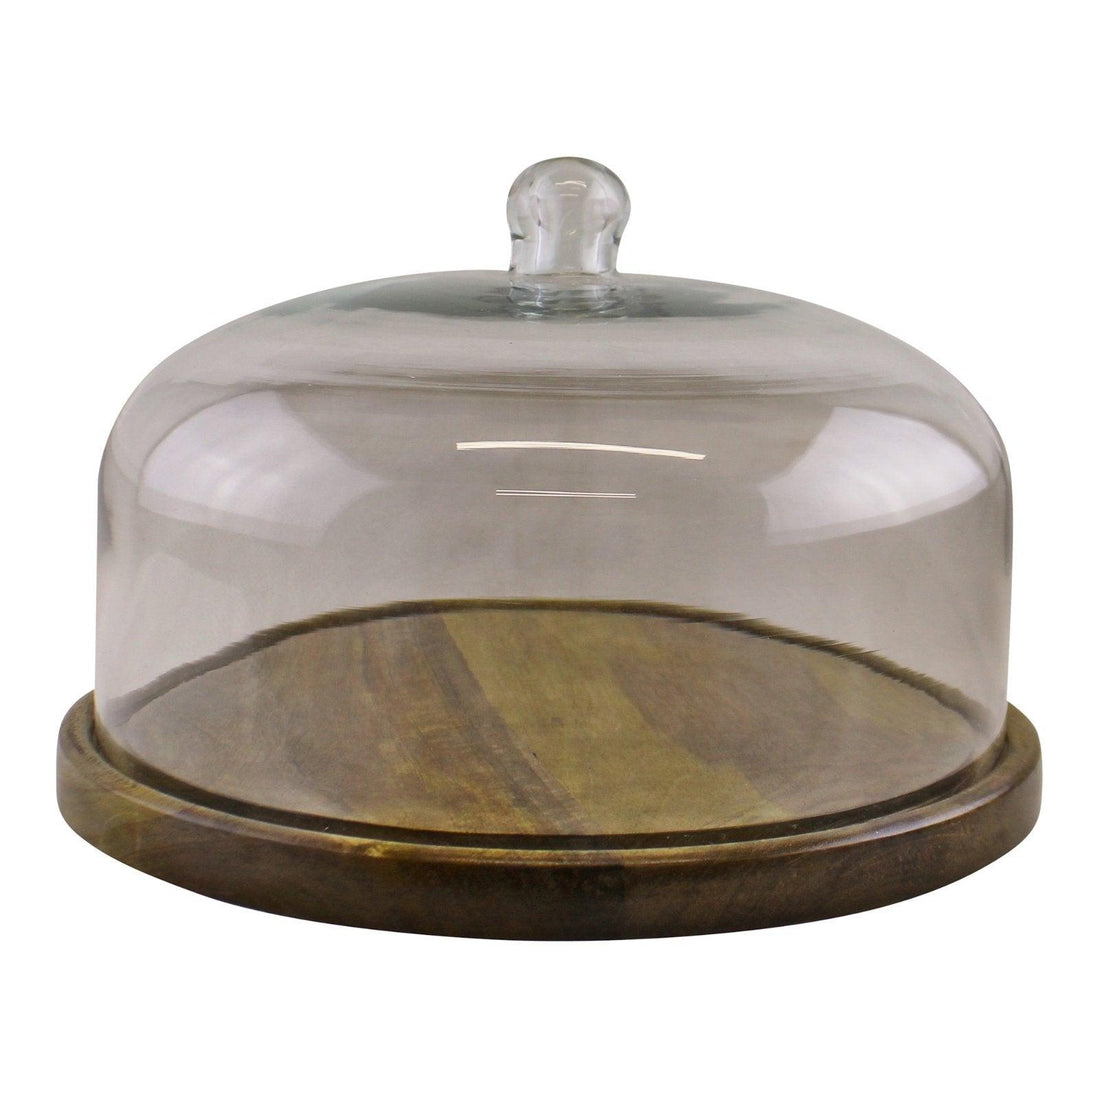 Mango Wood Cake Stand With Glass Dome - £70.99 - Kitchen Storage 